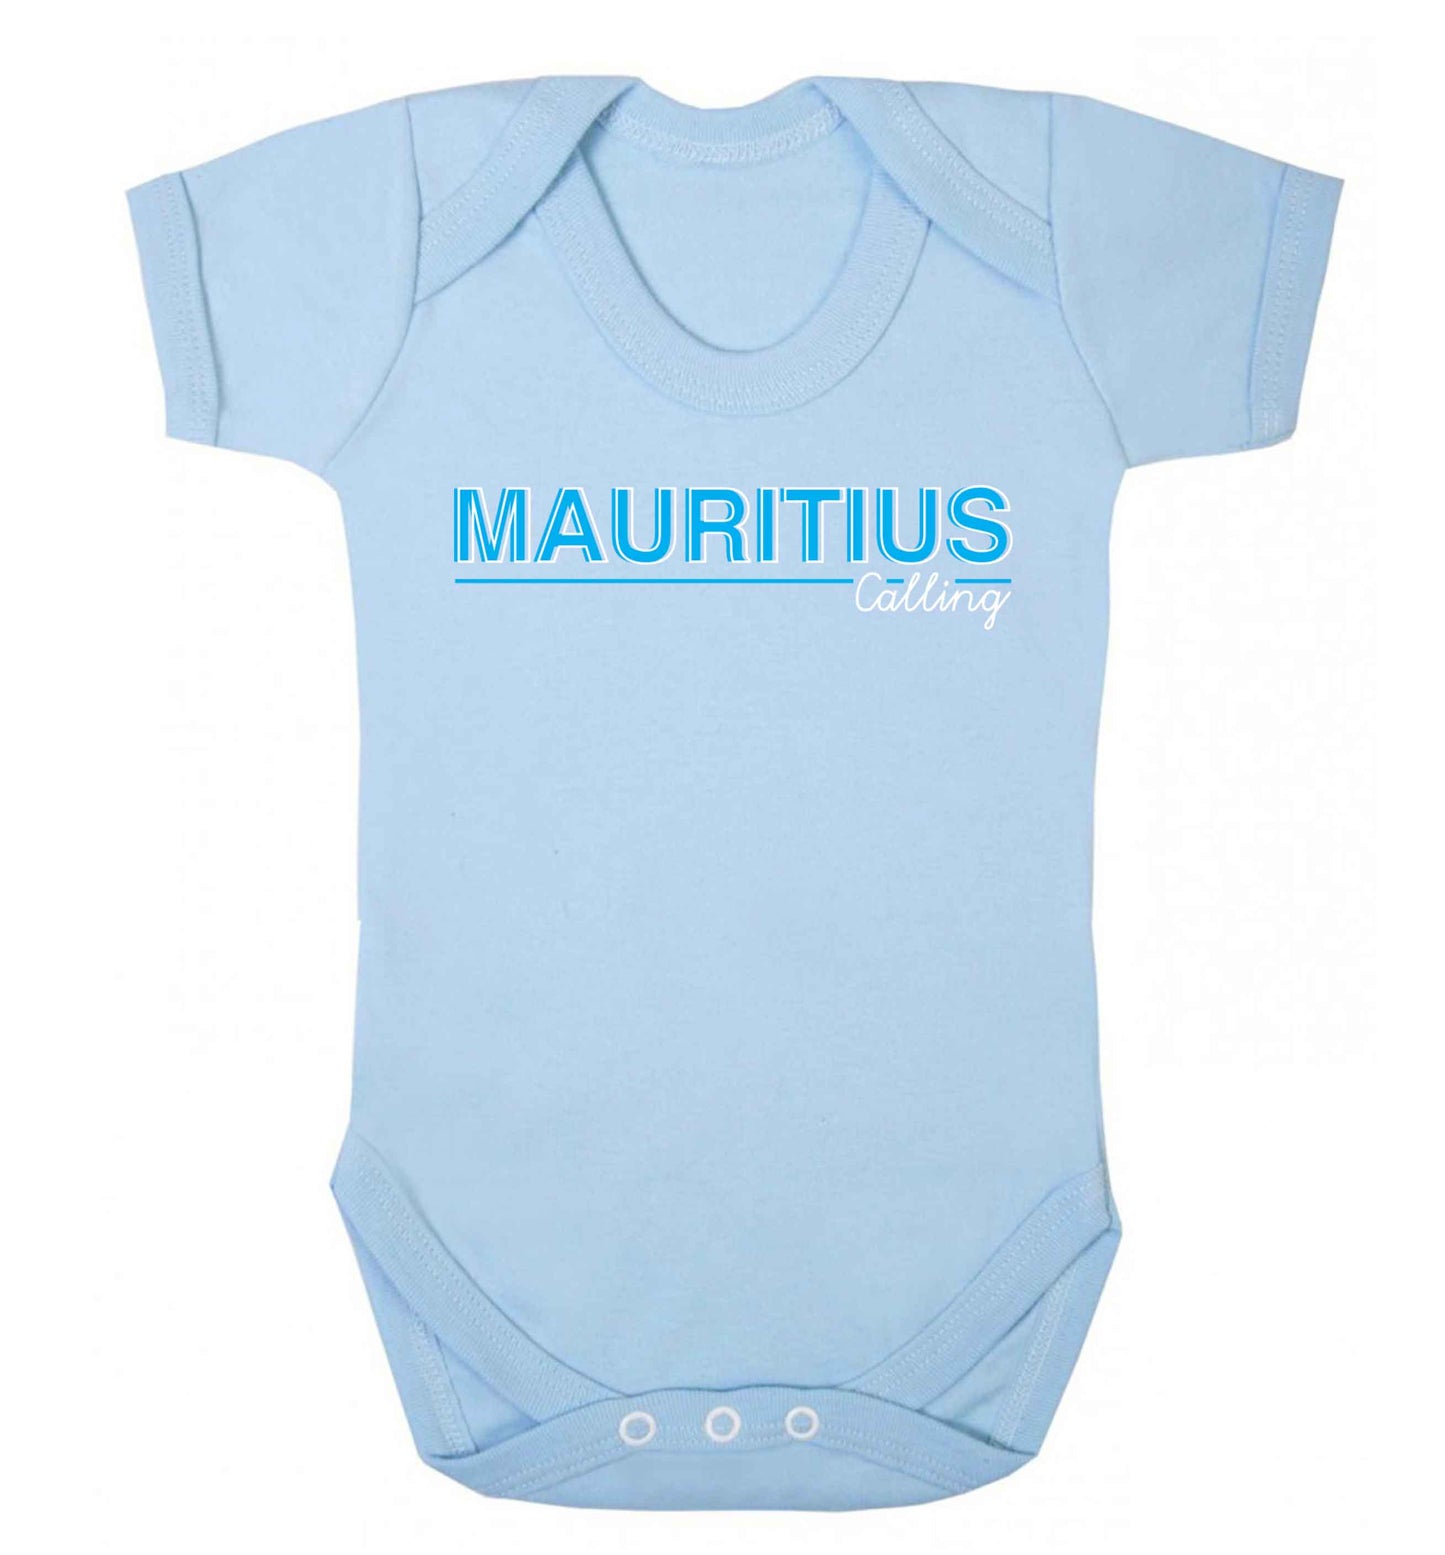 Mauritius calling Baby Vest pale blue 18-24 months